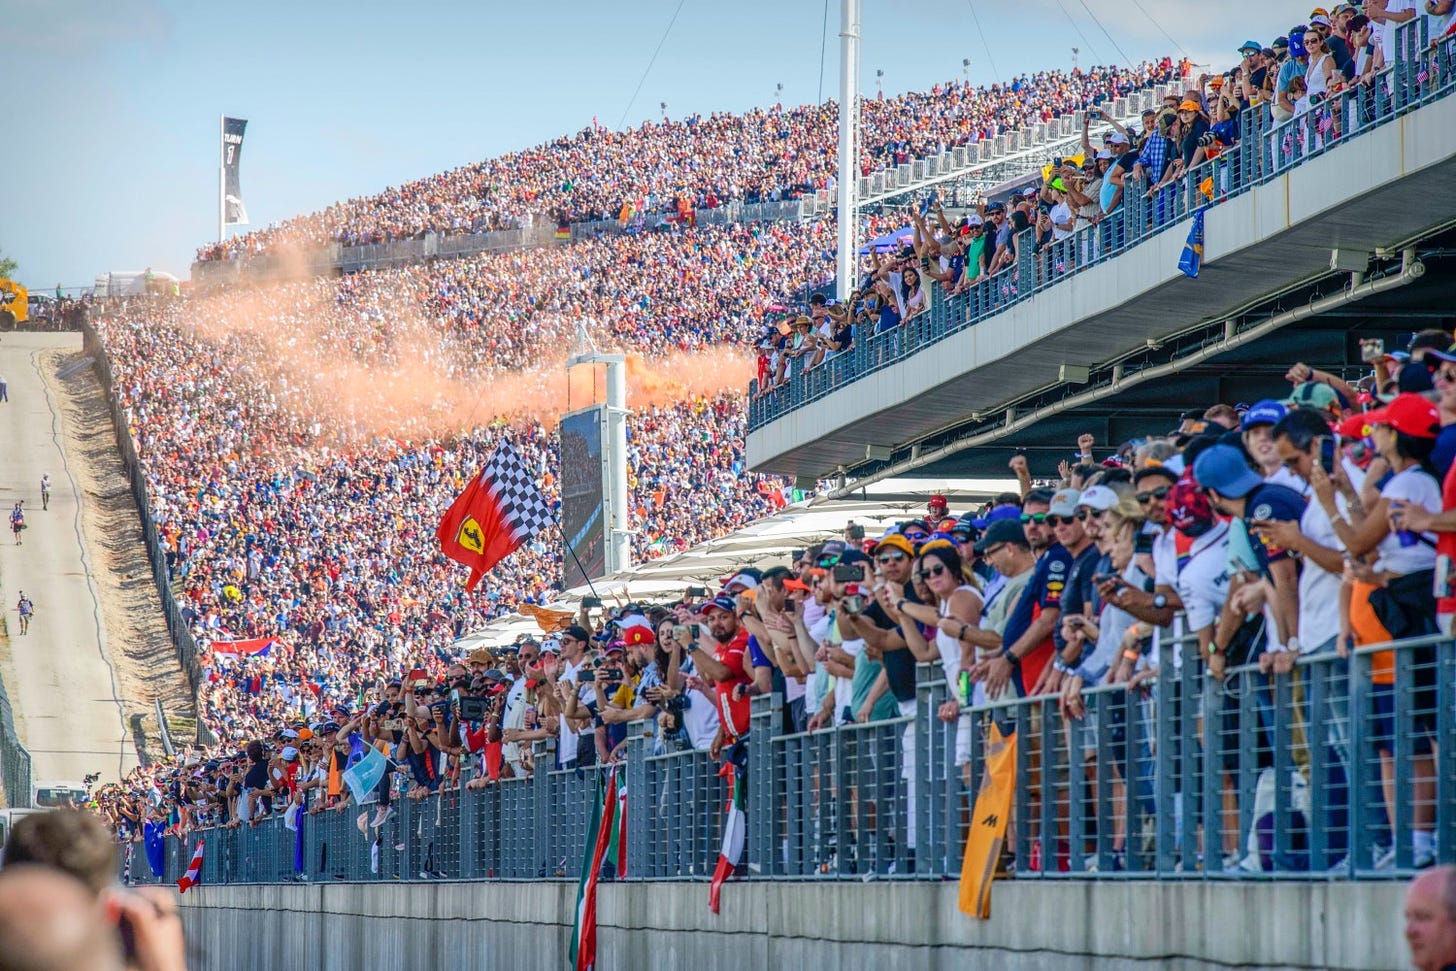 F1: Record crowd at USGP blows away IndyCar fans - AutoRacing1.com